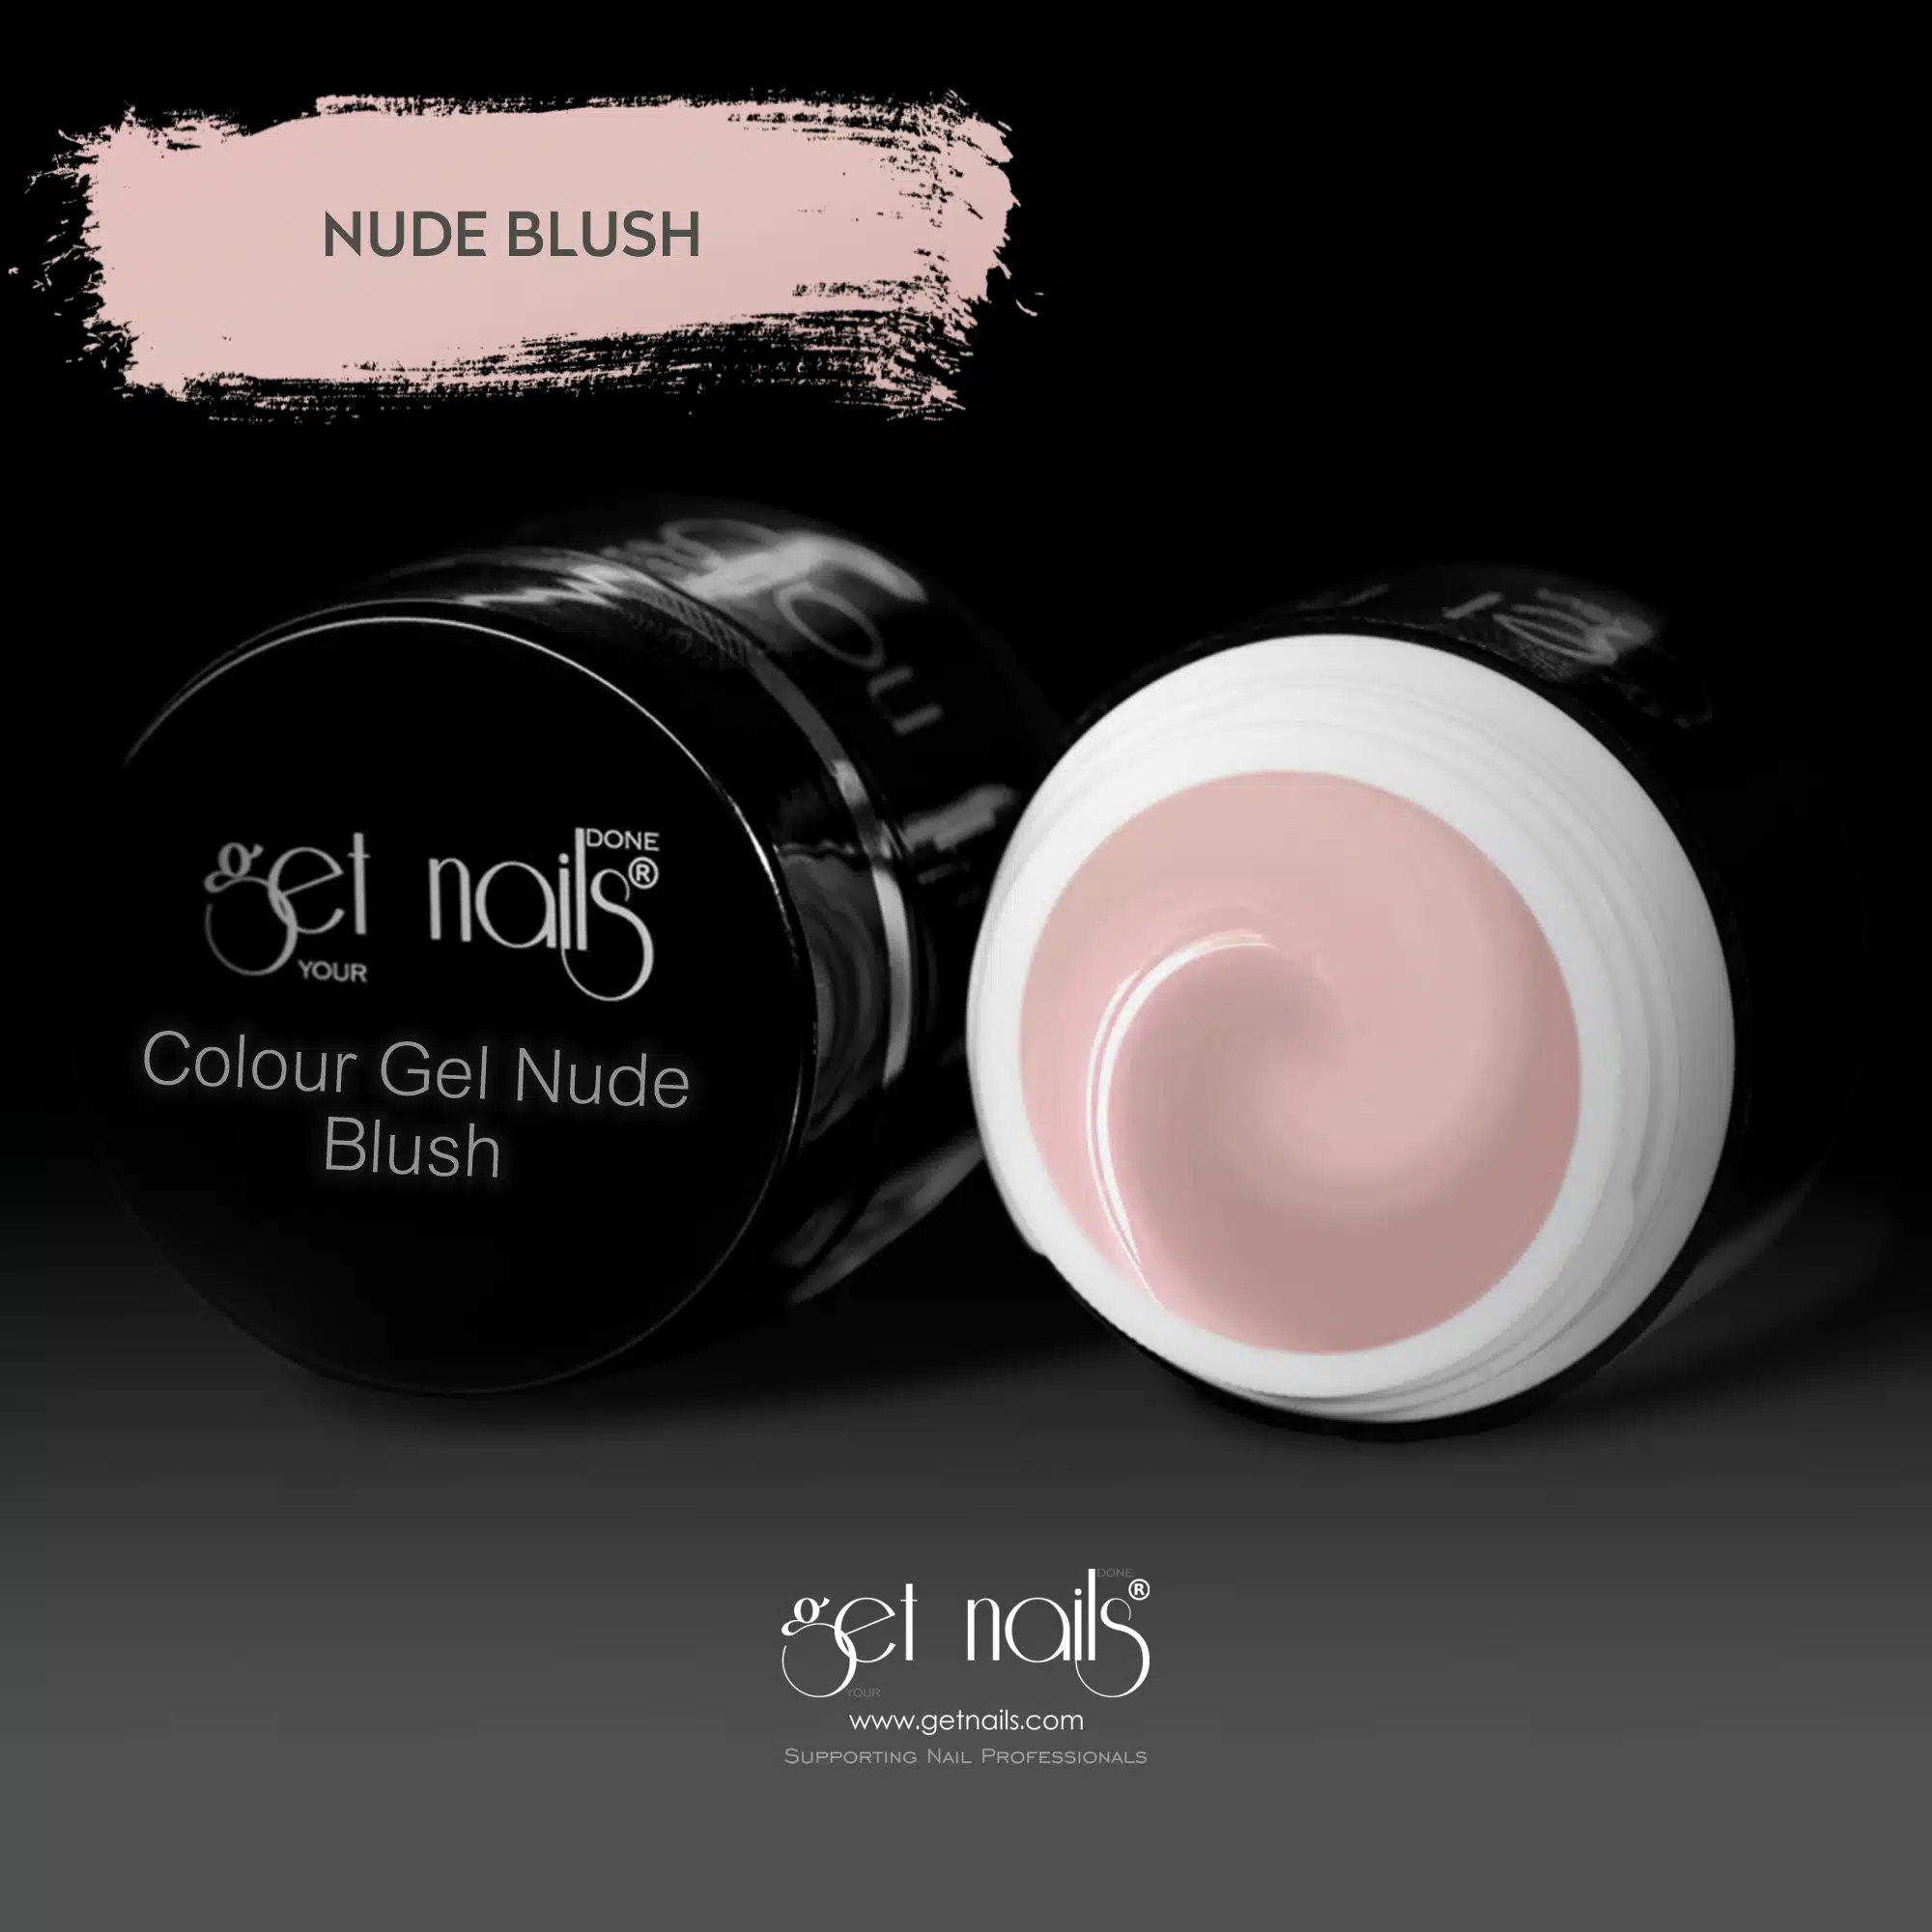 Get Nails Austria - Gel colorato Nude Blush 5g